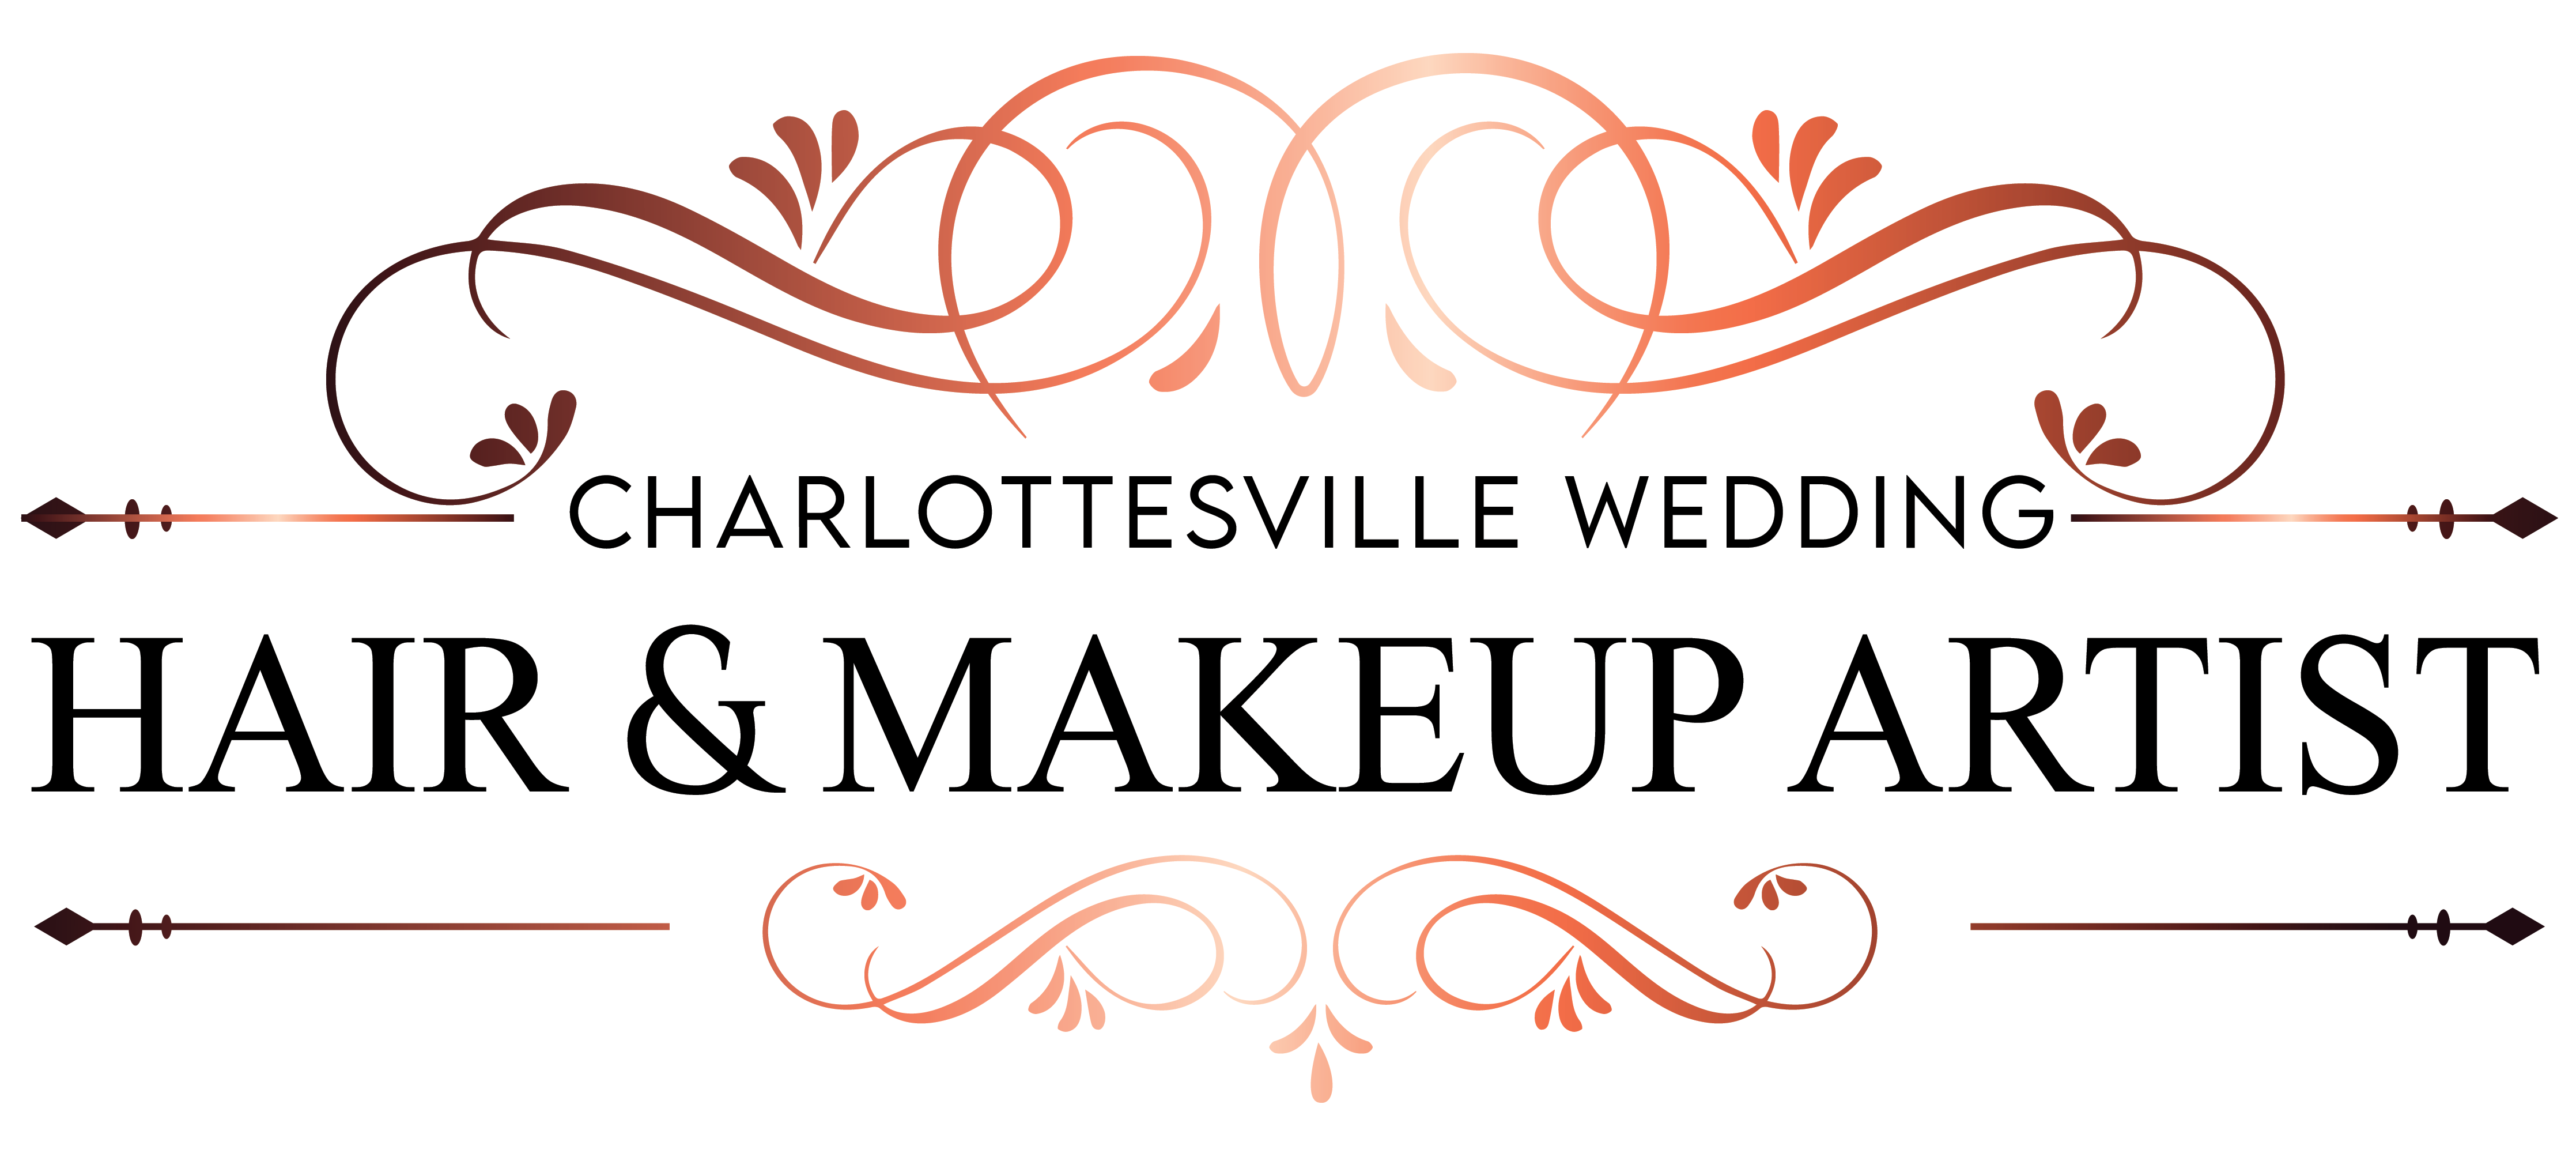 Charlottesville Wedding Hair & Makeup Artist